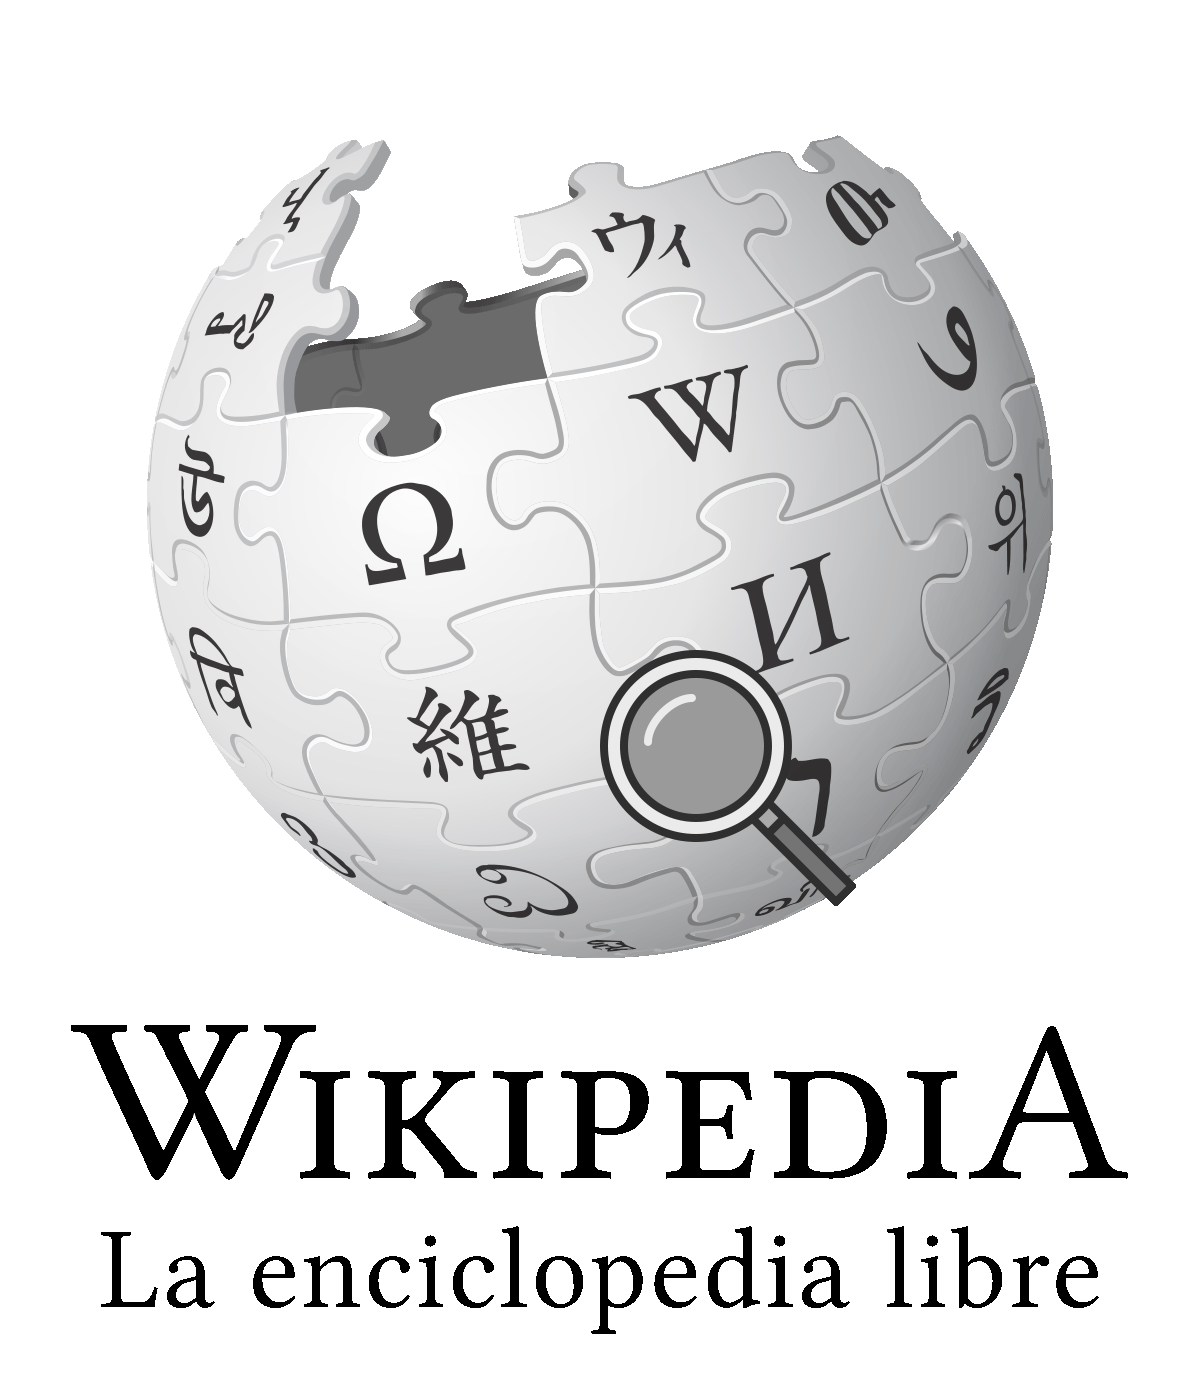 File:Wikipedia Search.gif - Wikimedia Commons